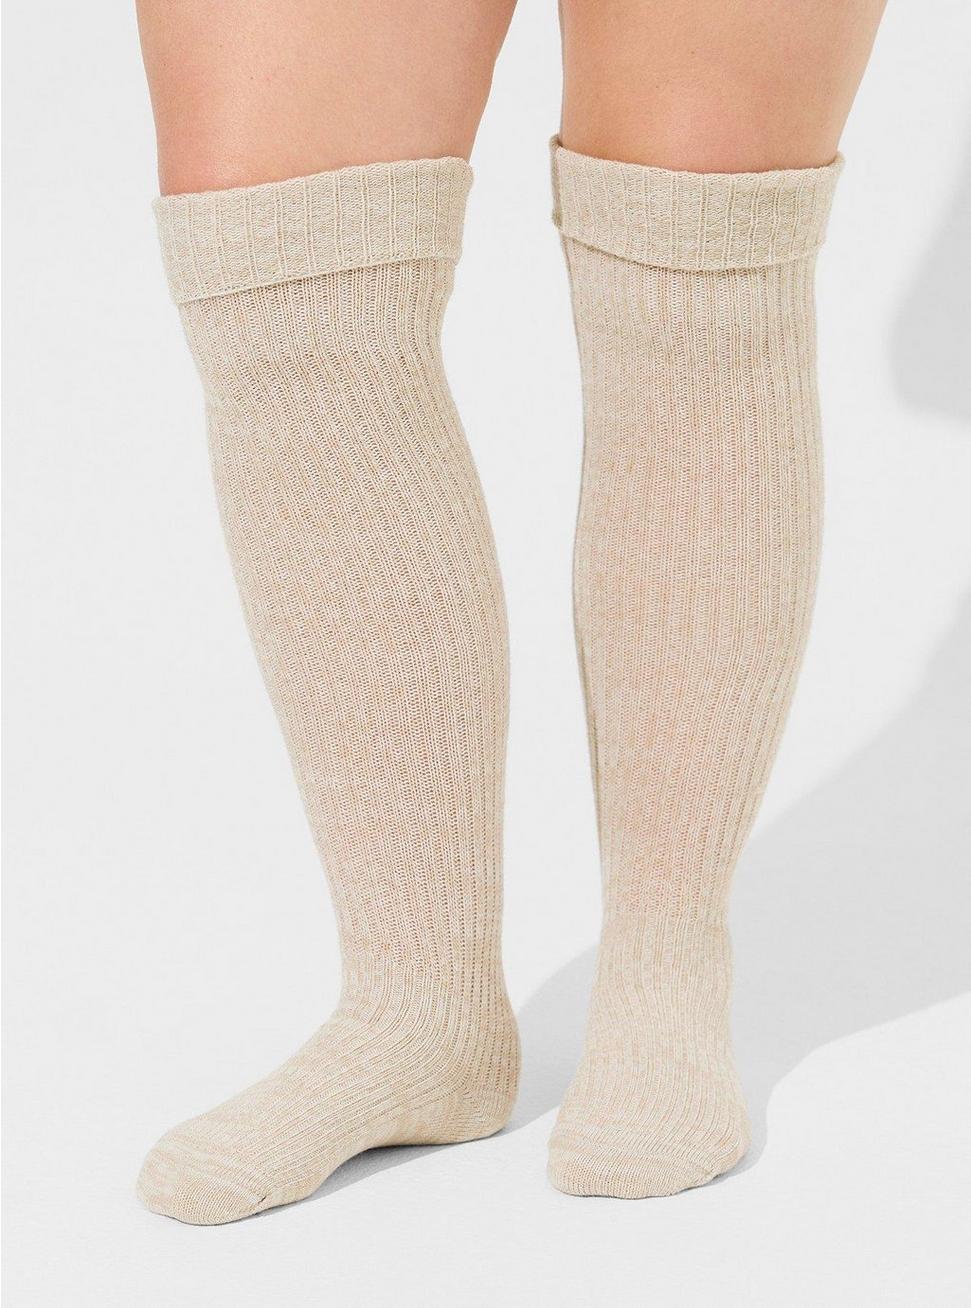 chris boris add torrid knee high socks photo